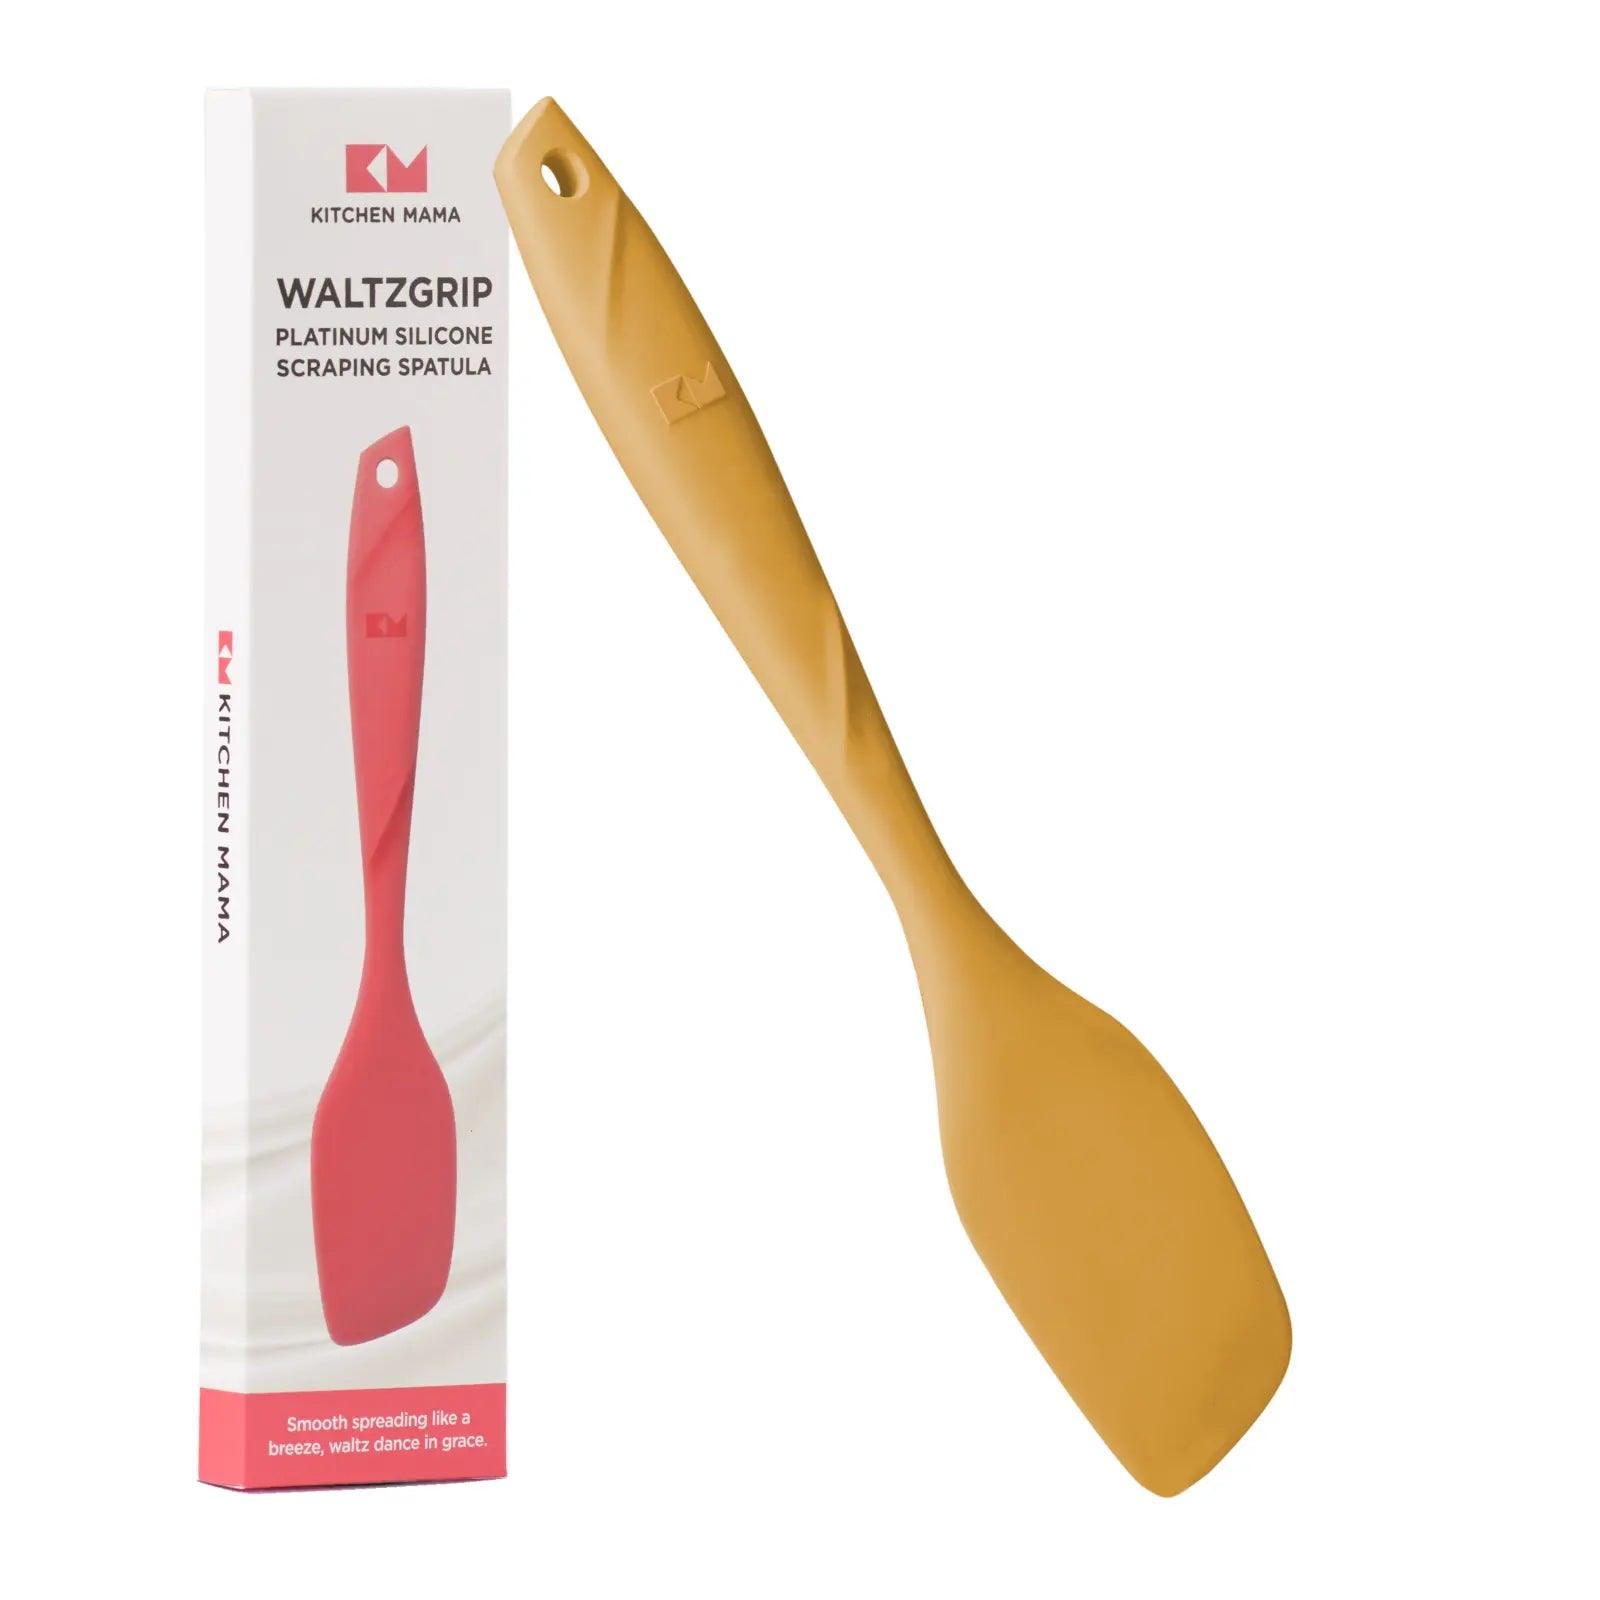 Kitchen Mama scraping spatula, Waltzgrip platinum silicone scraping spatula, yellow